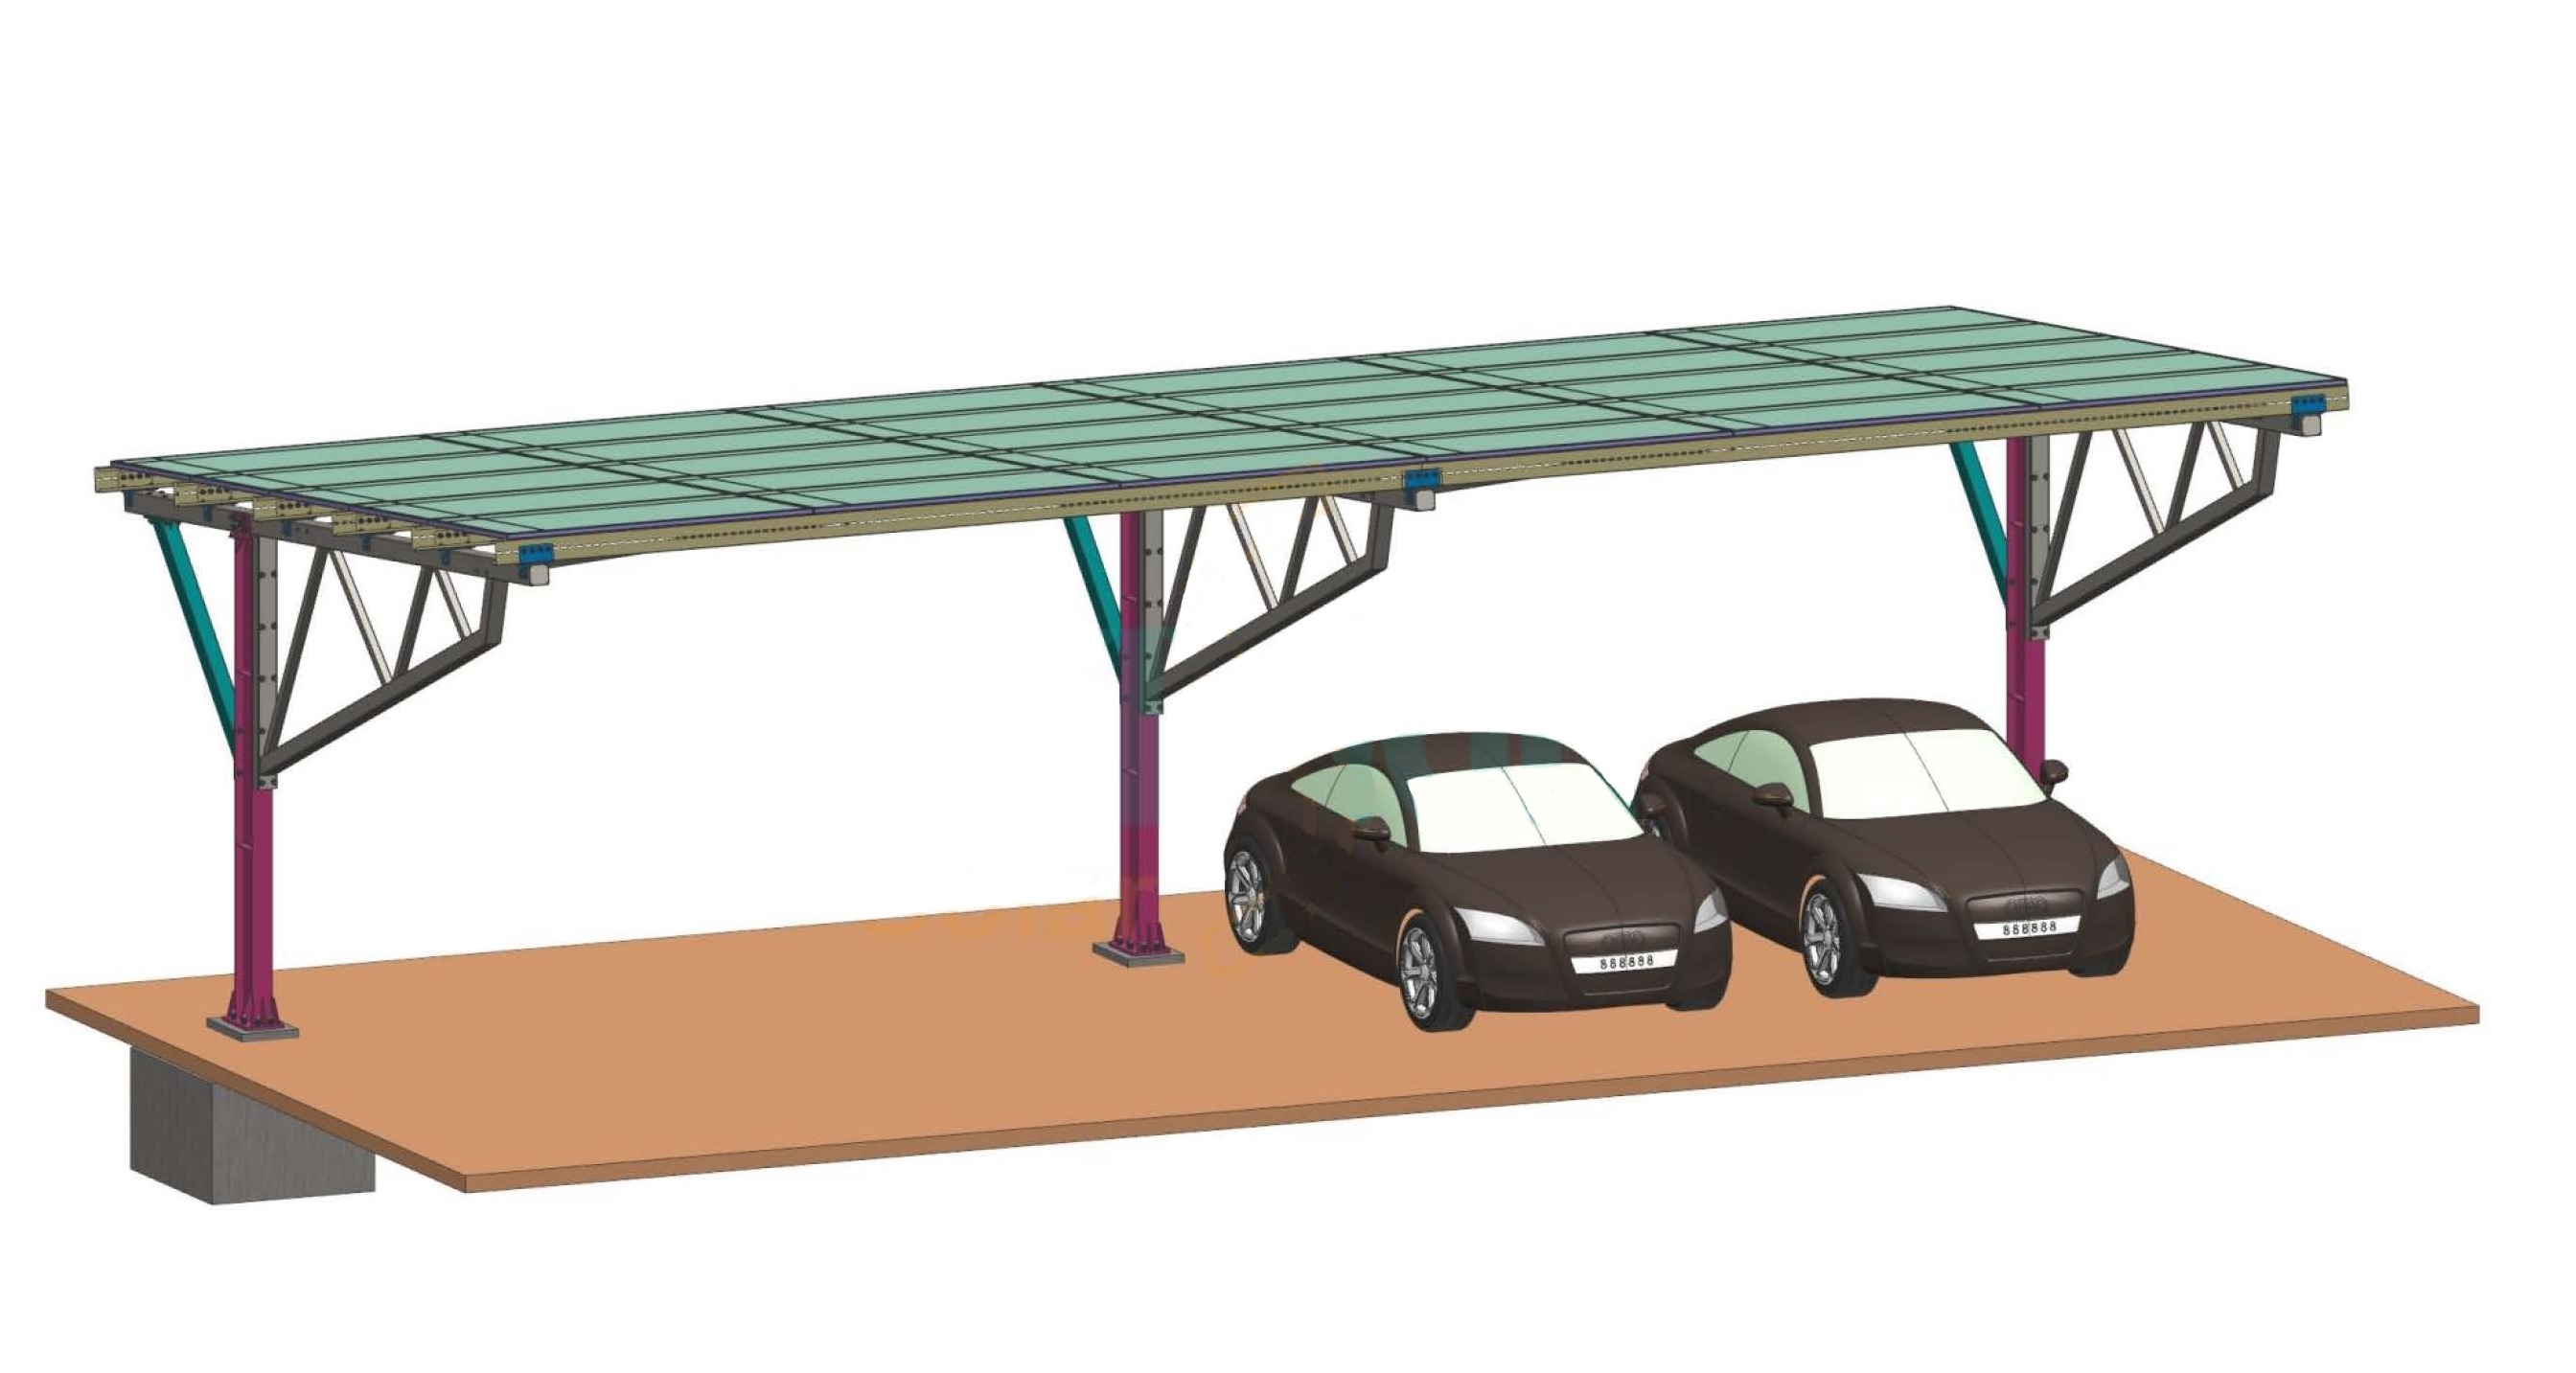 Solar carport